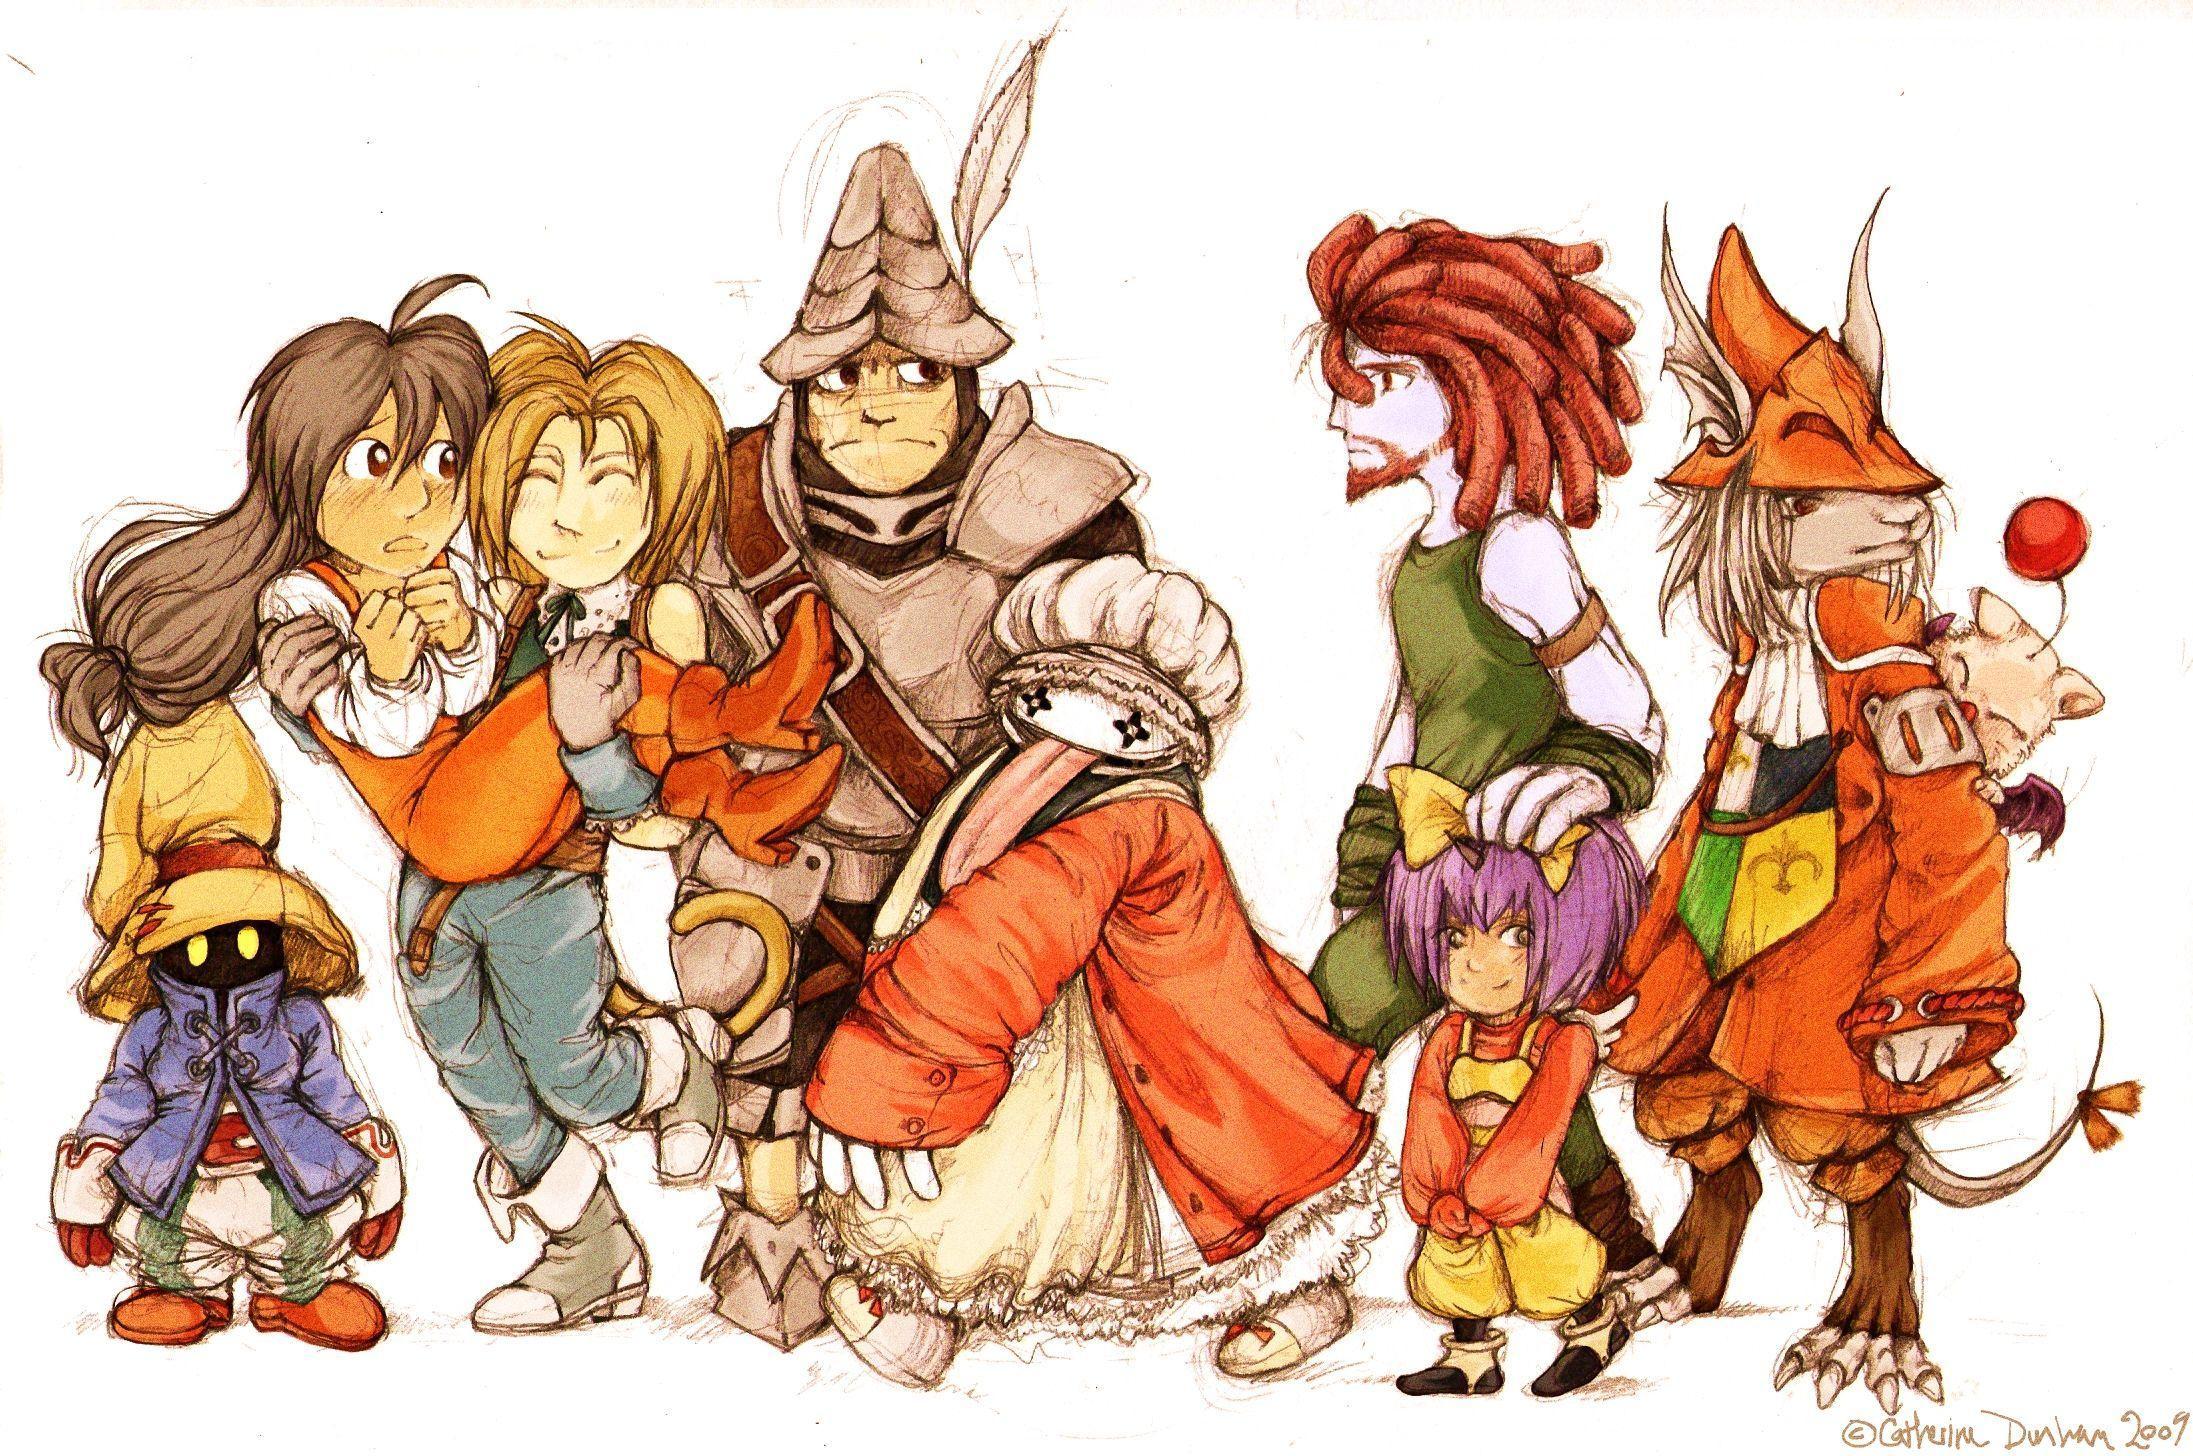 Final Fantasy IX Wallpapers (72+ images)